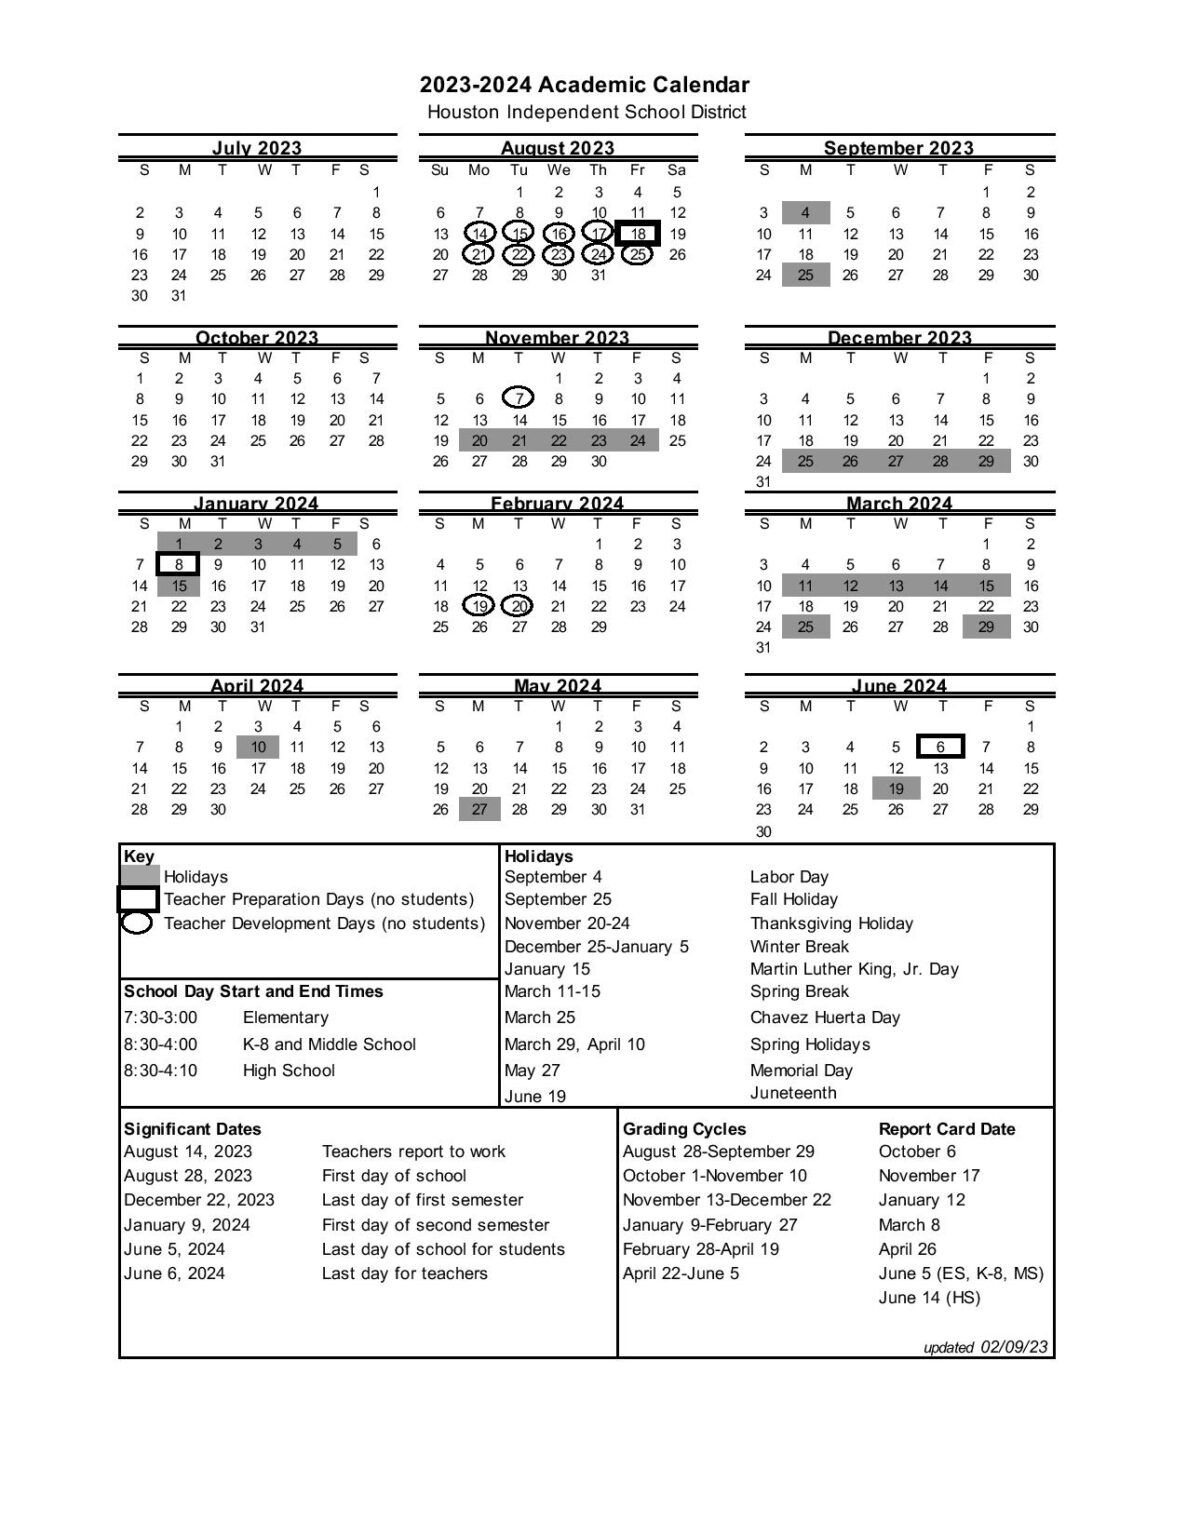 katy-isd-22-23-calendar-customize-and-print